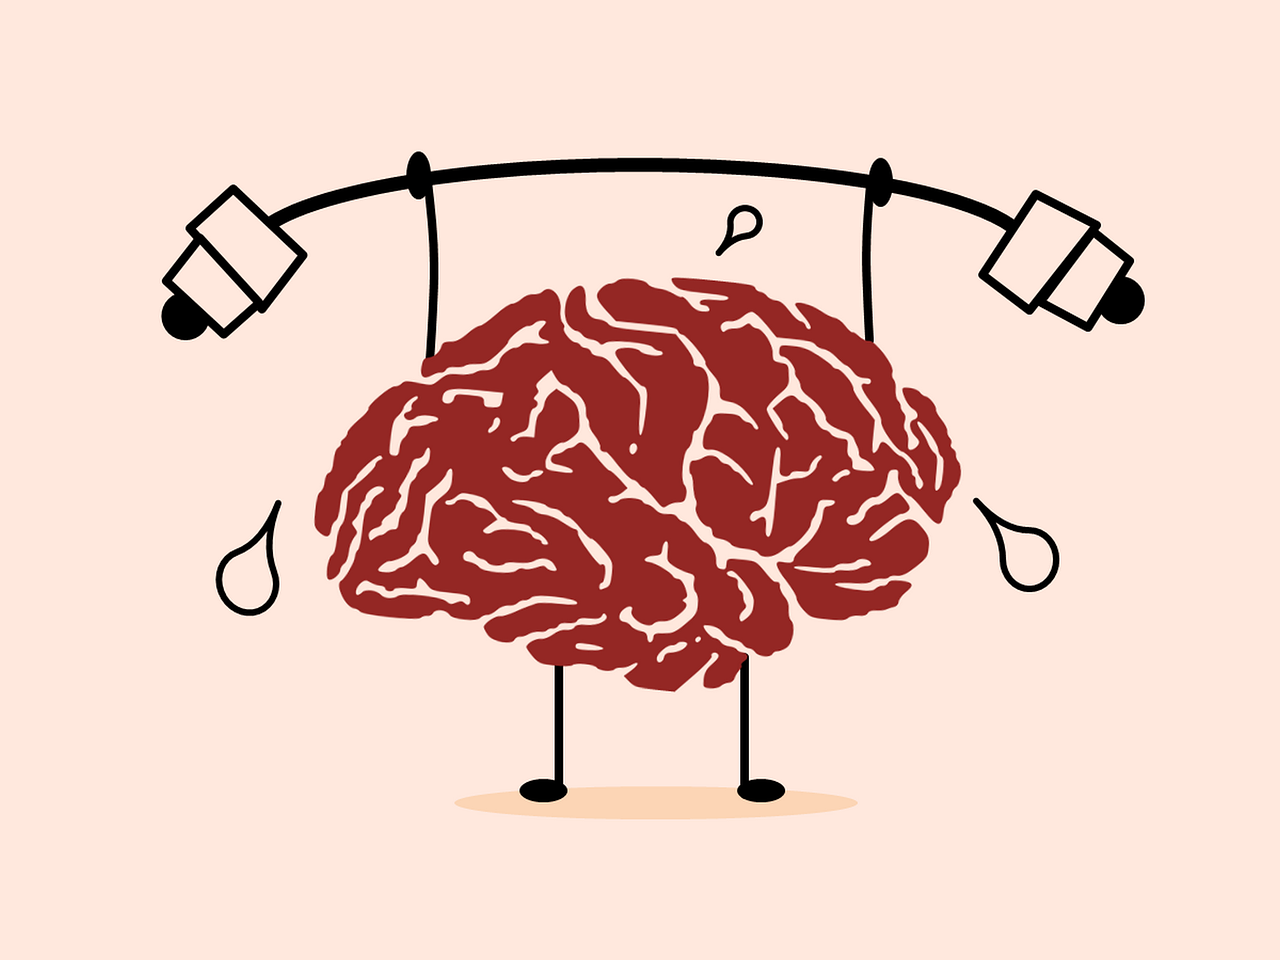 a cartoon of a brain lifting weights